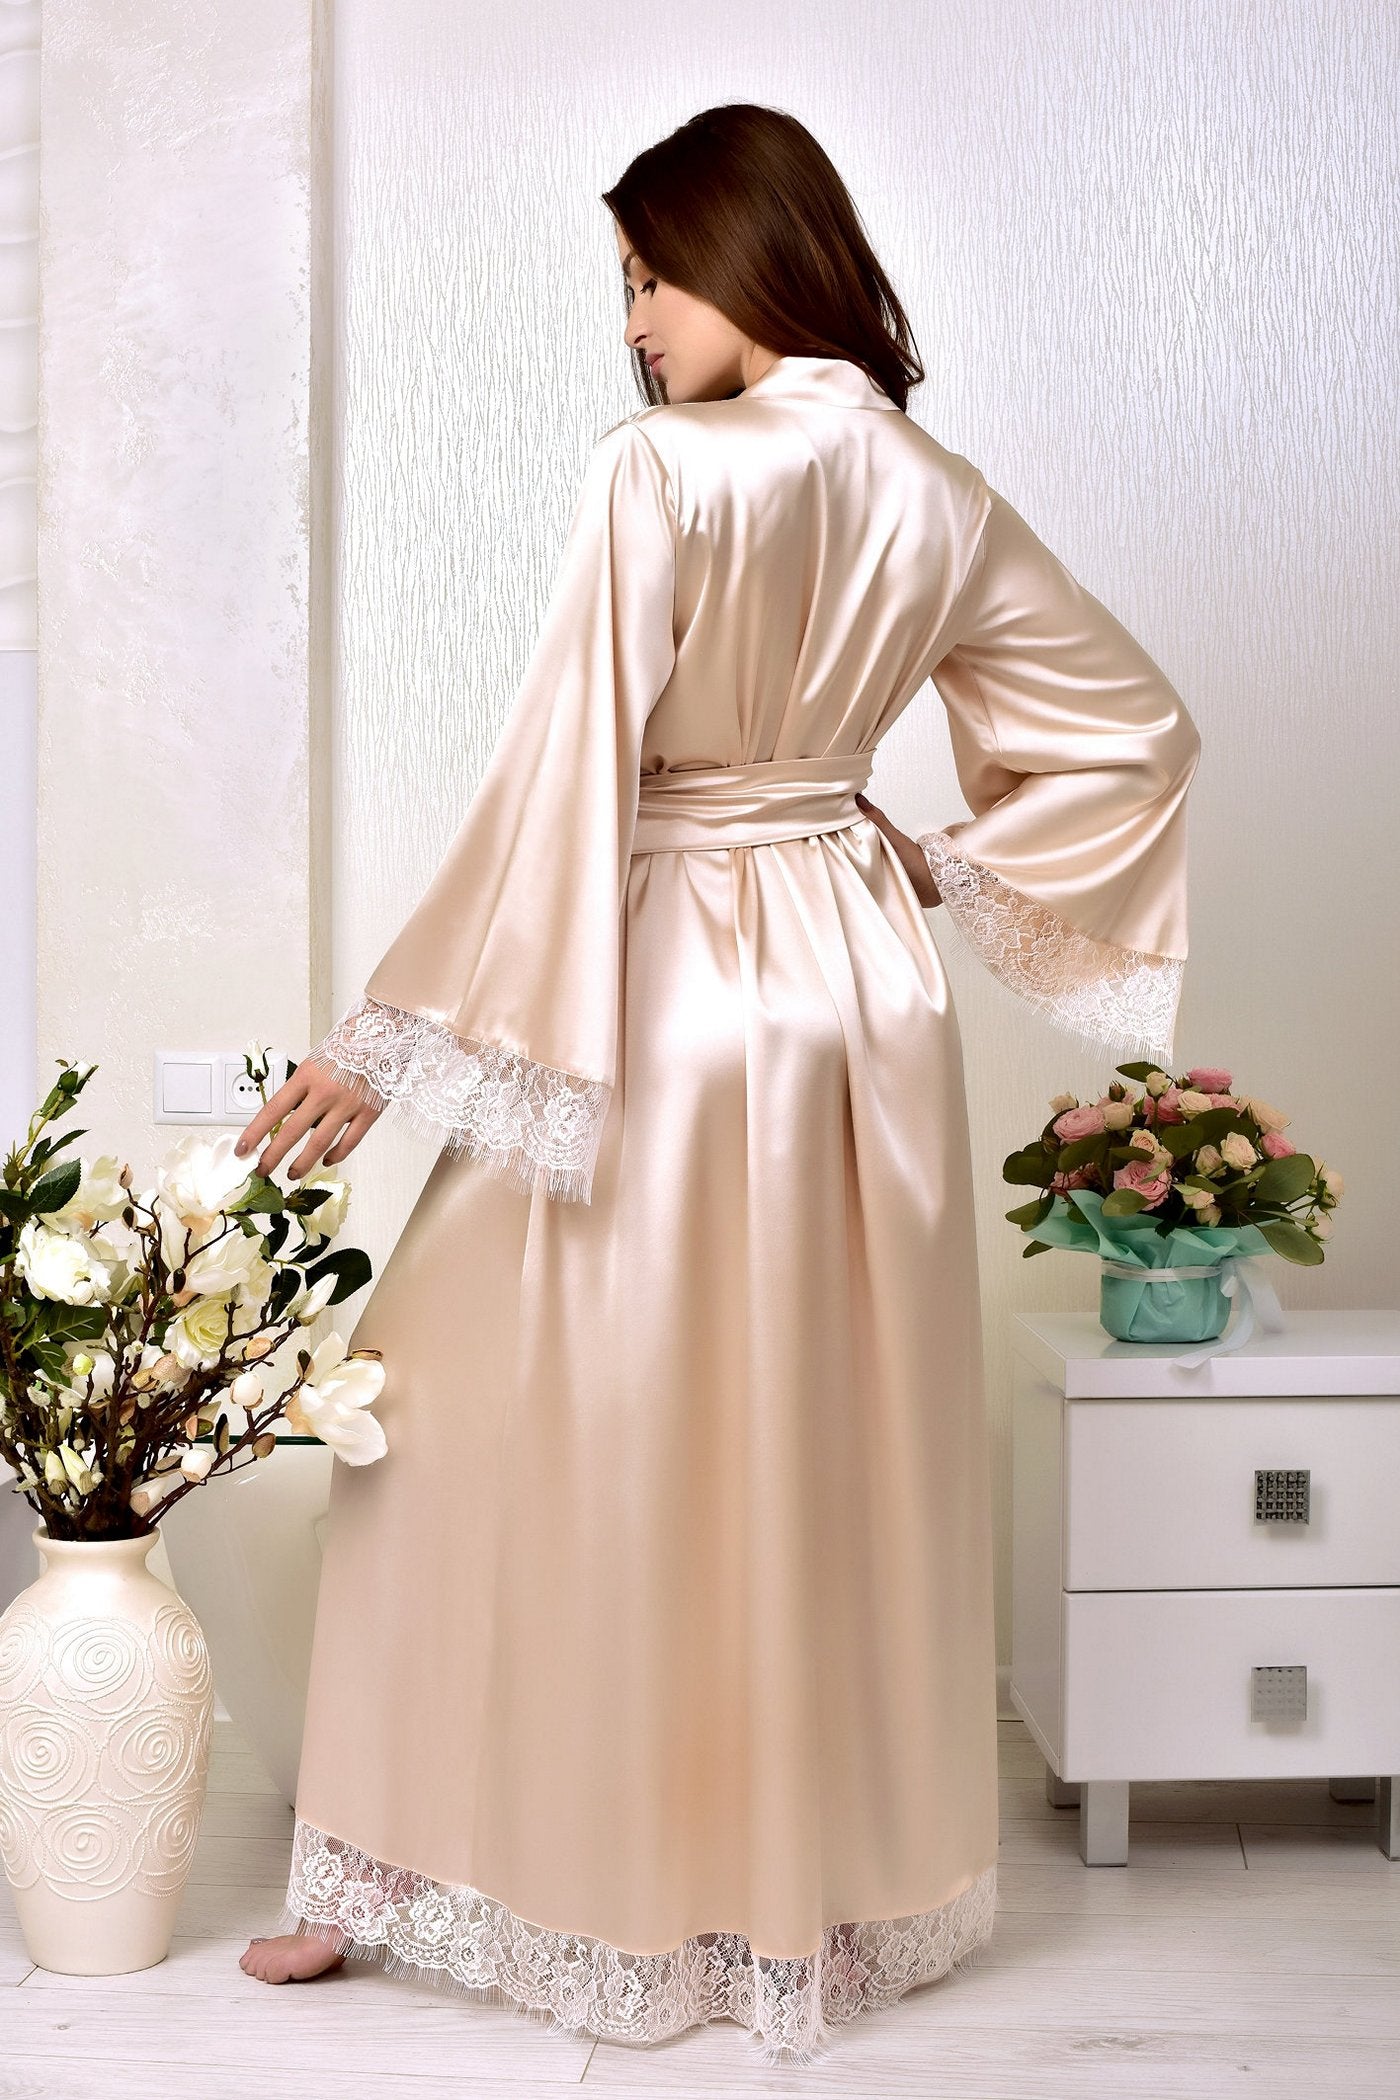 Sensual Beige Satin Robe - Floor-Length, Kimono Style, Lace-Trim